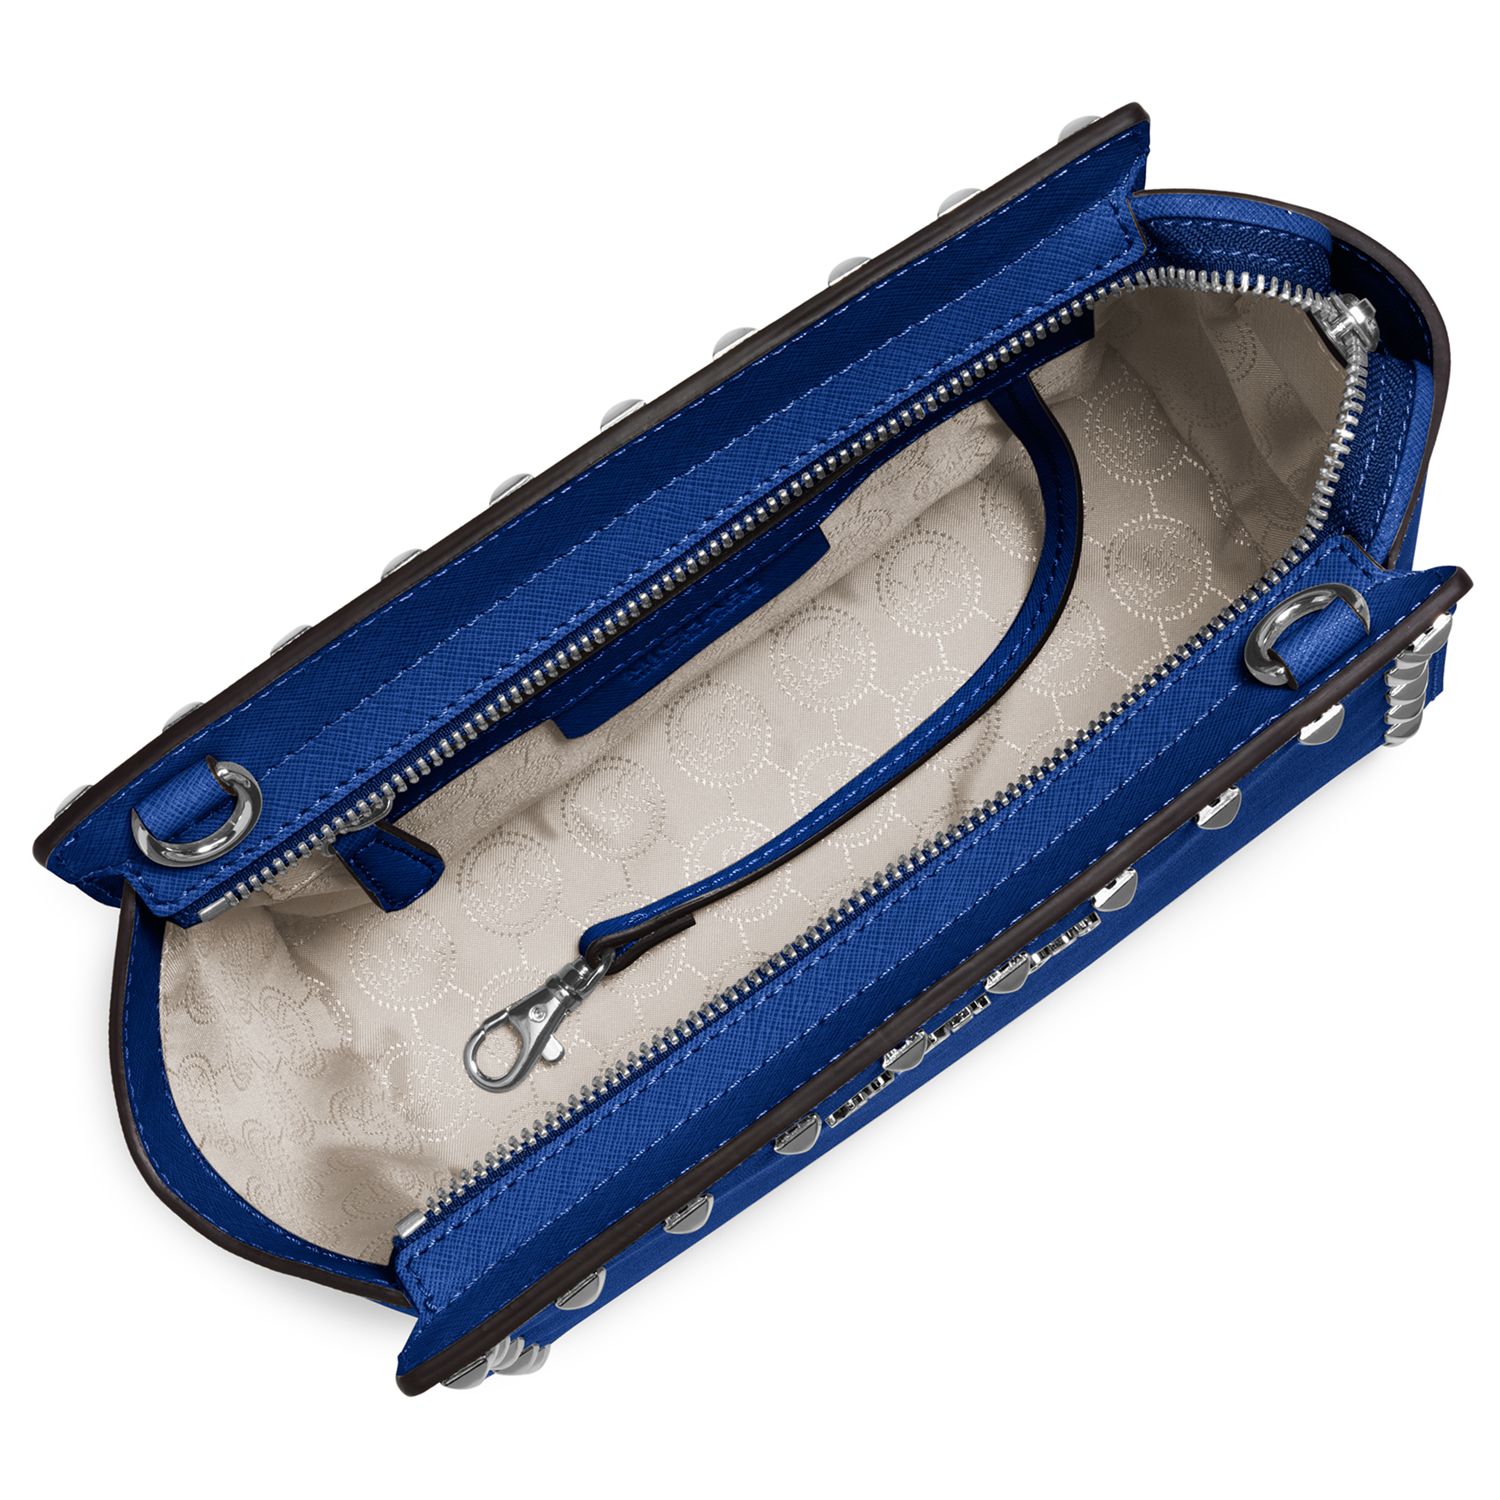 michael kors blue studded handbag